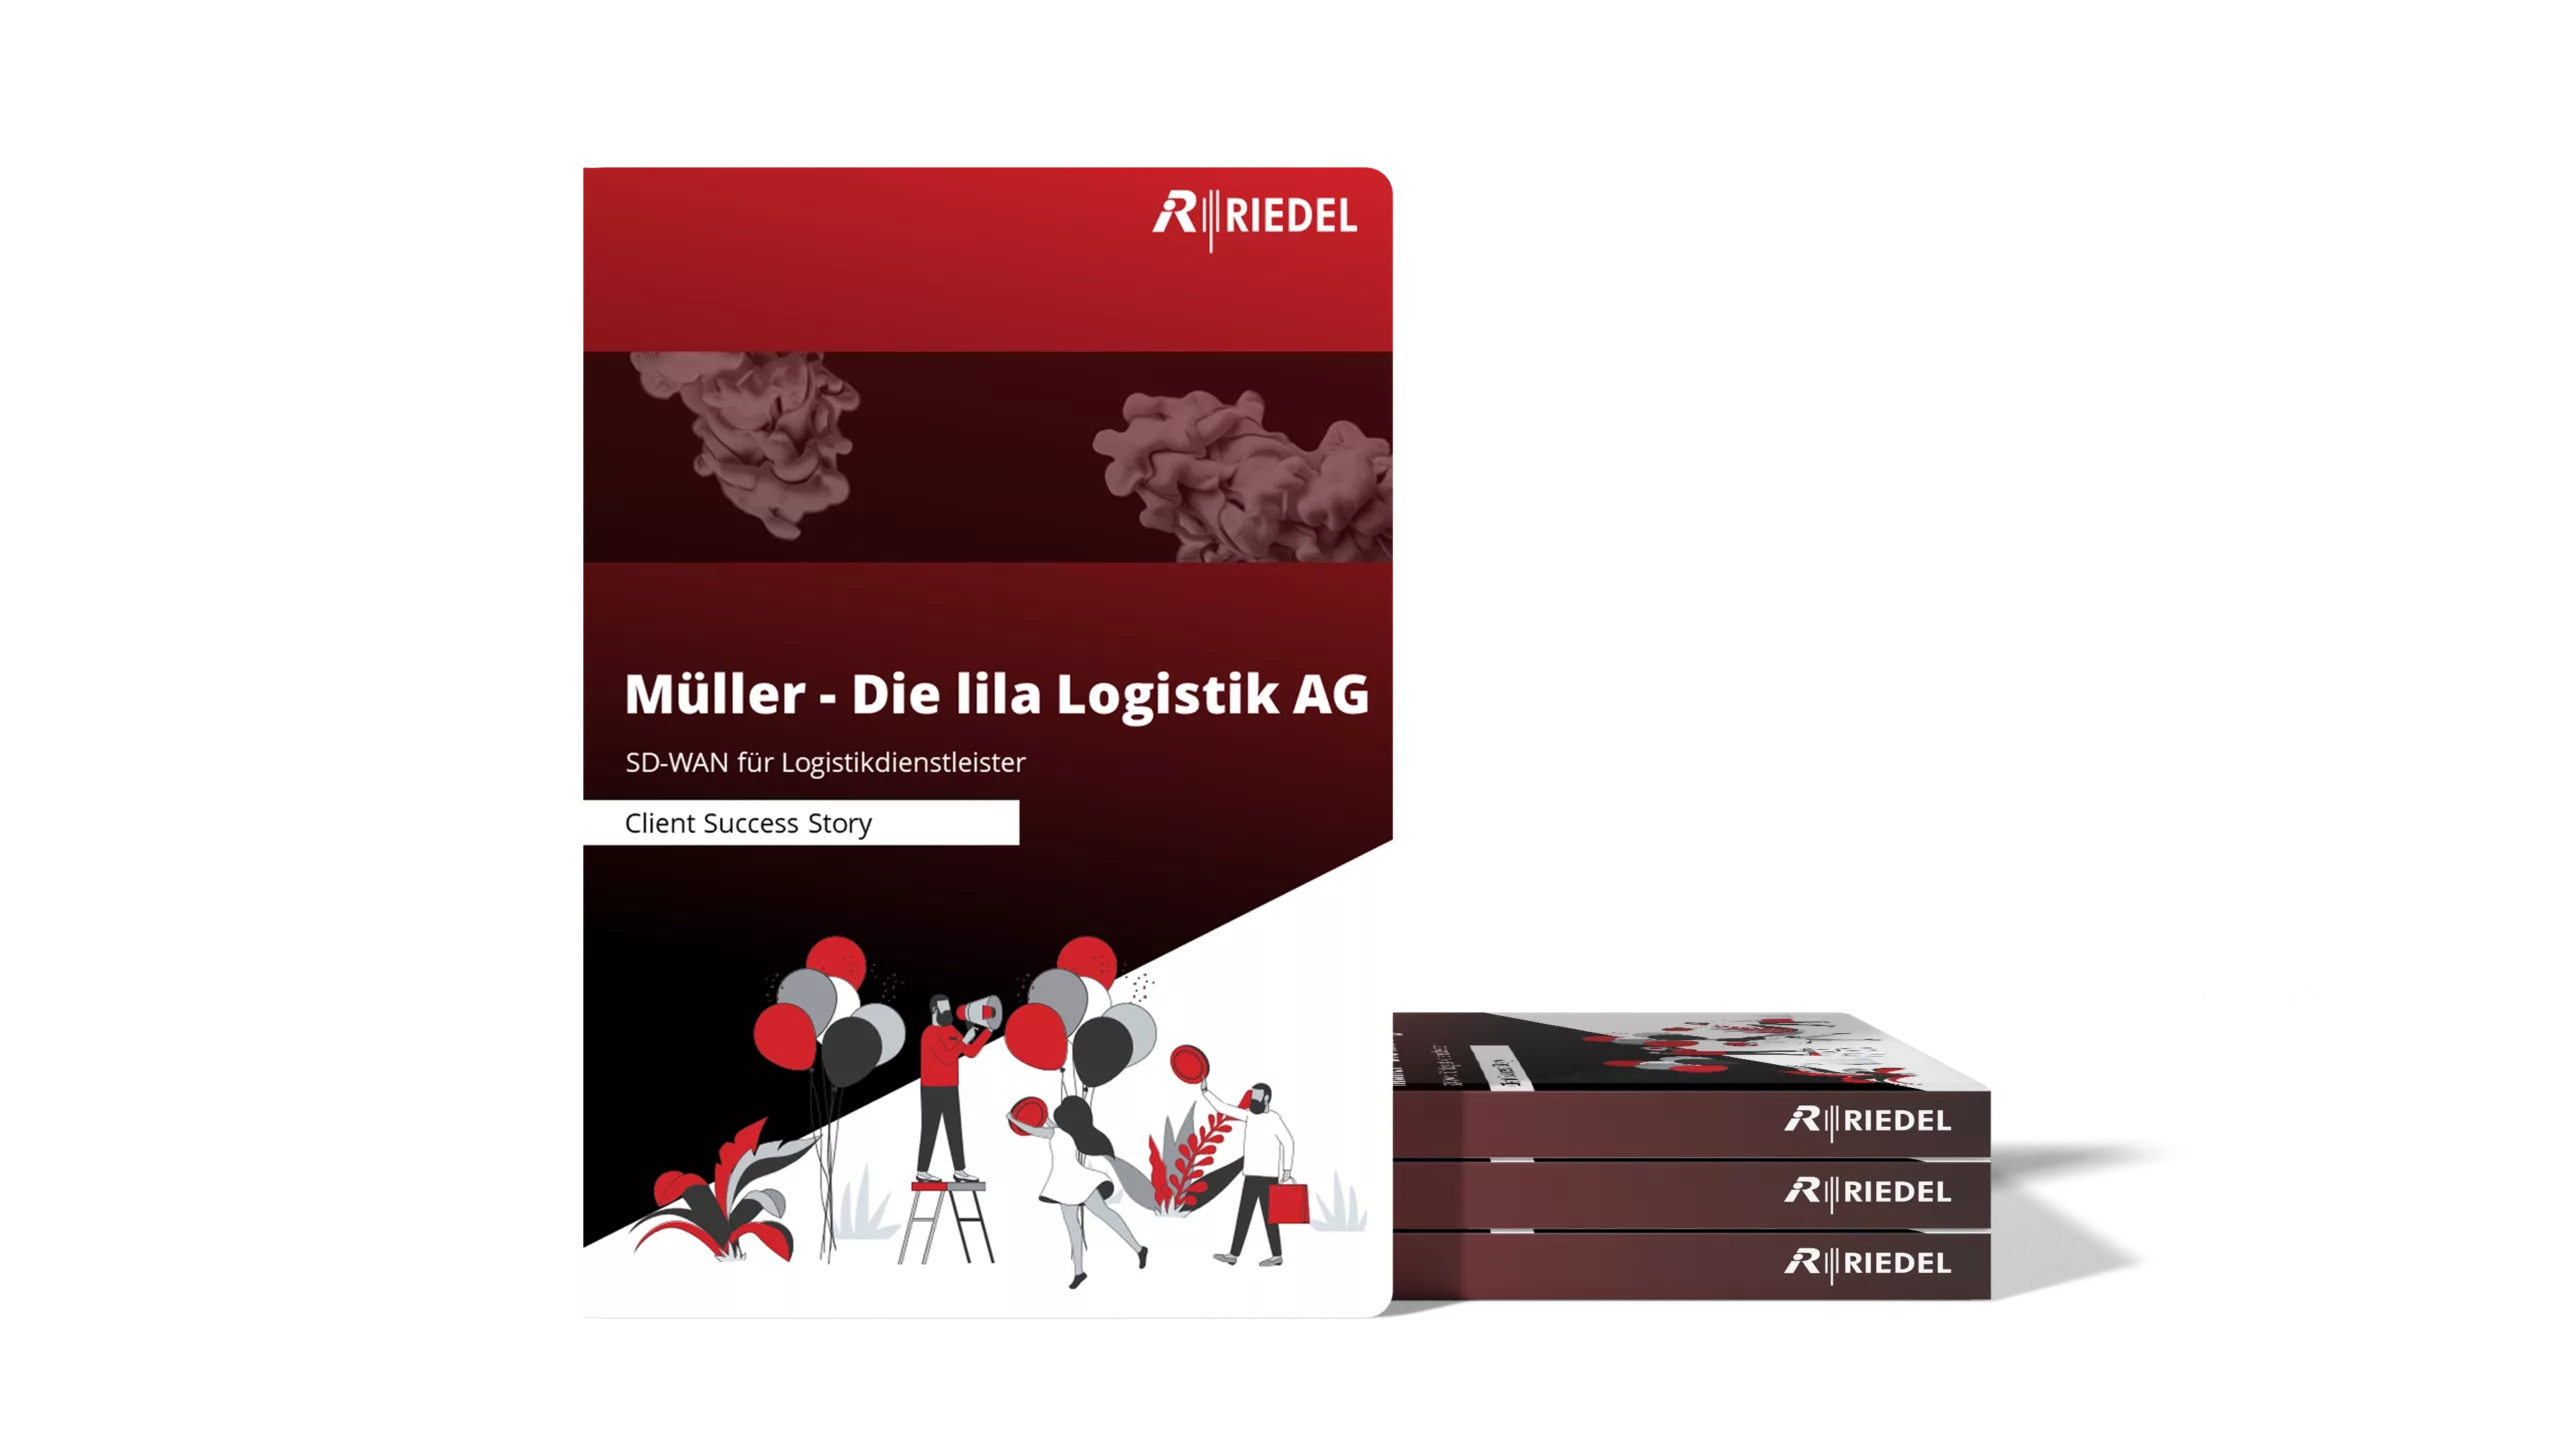 Müller – Die lila Logistik AG Success Story